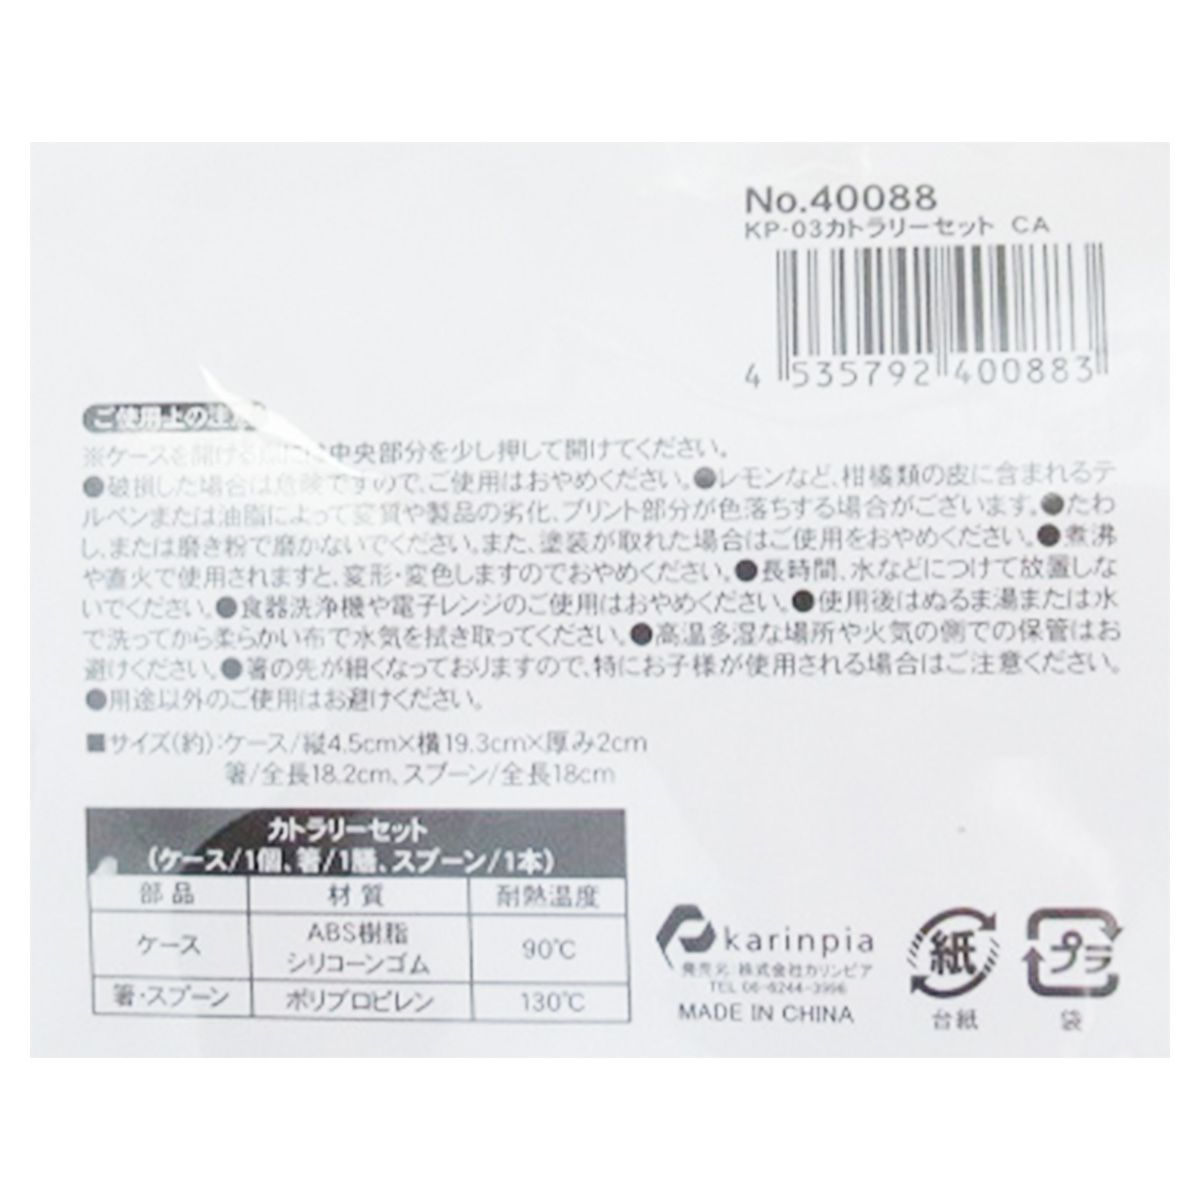 【OUTLET】カトラリーセット シリコン製 箸・スプーンセット キャメル 324219